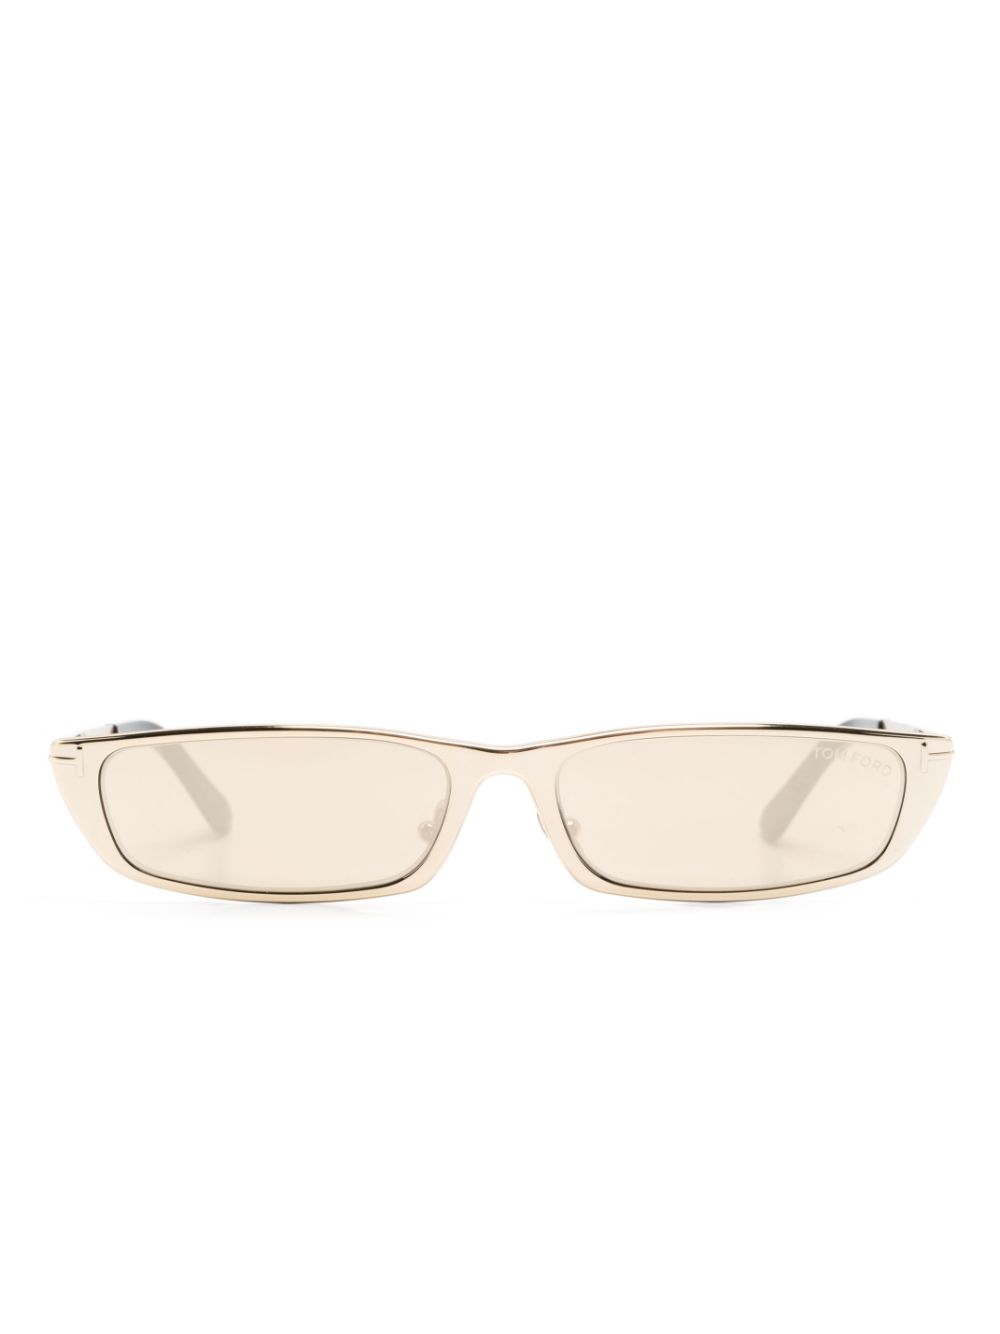 Tom Ford Everett Square Mirrored Sunglasses In Gold